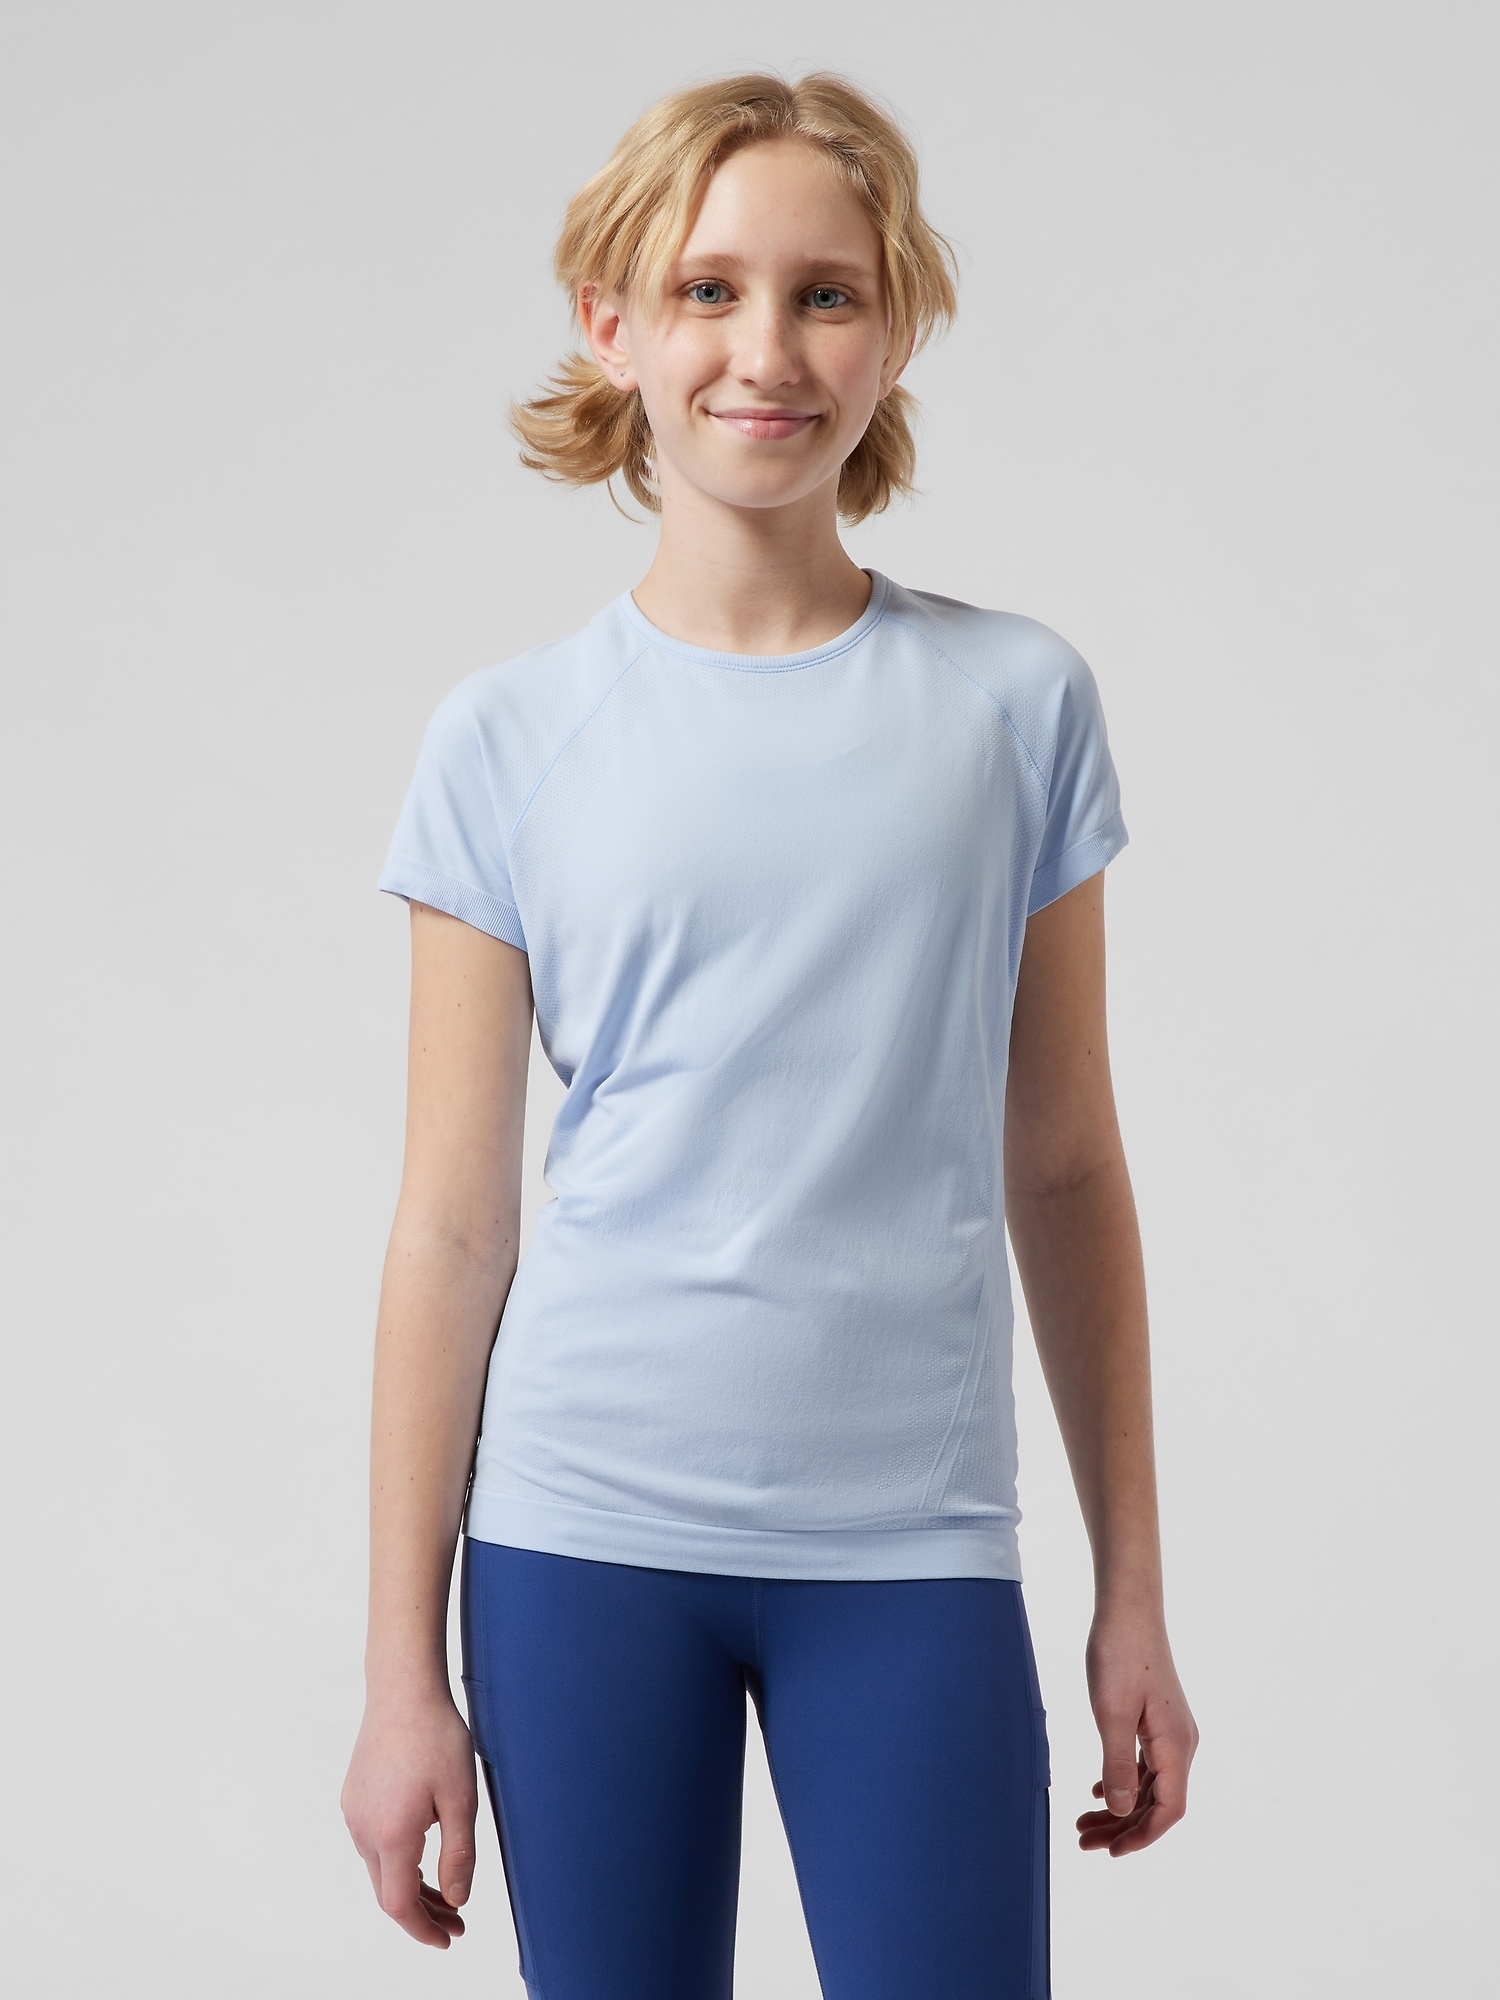 Athleta Girl Power Up Seamless Regular Length Tee blue. 1